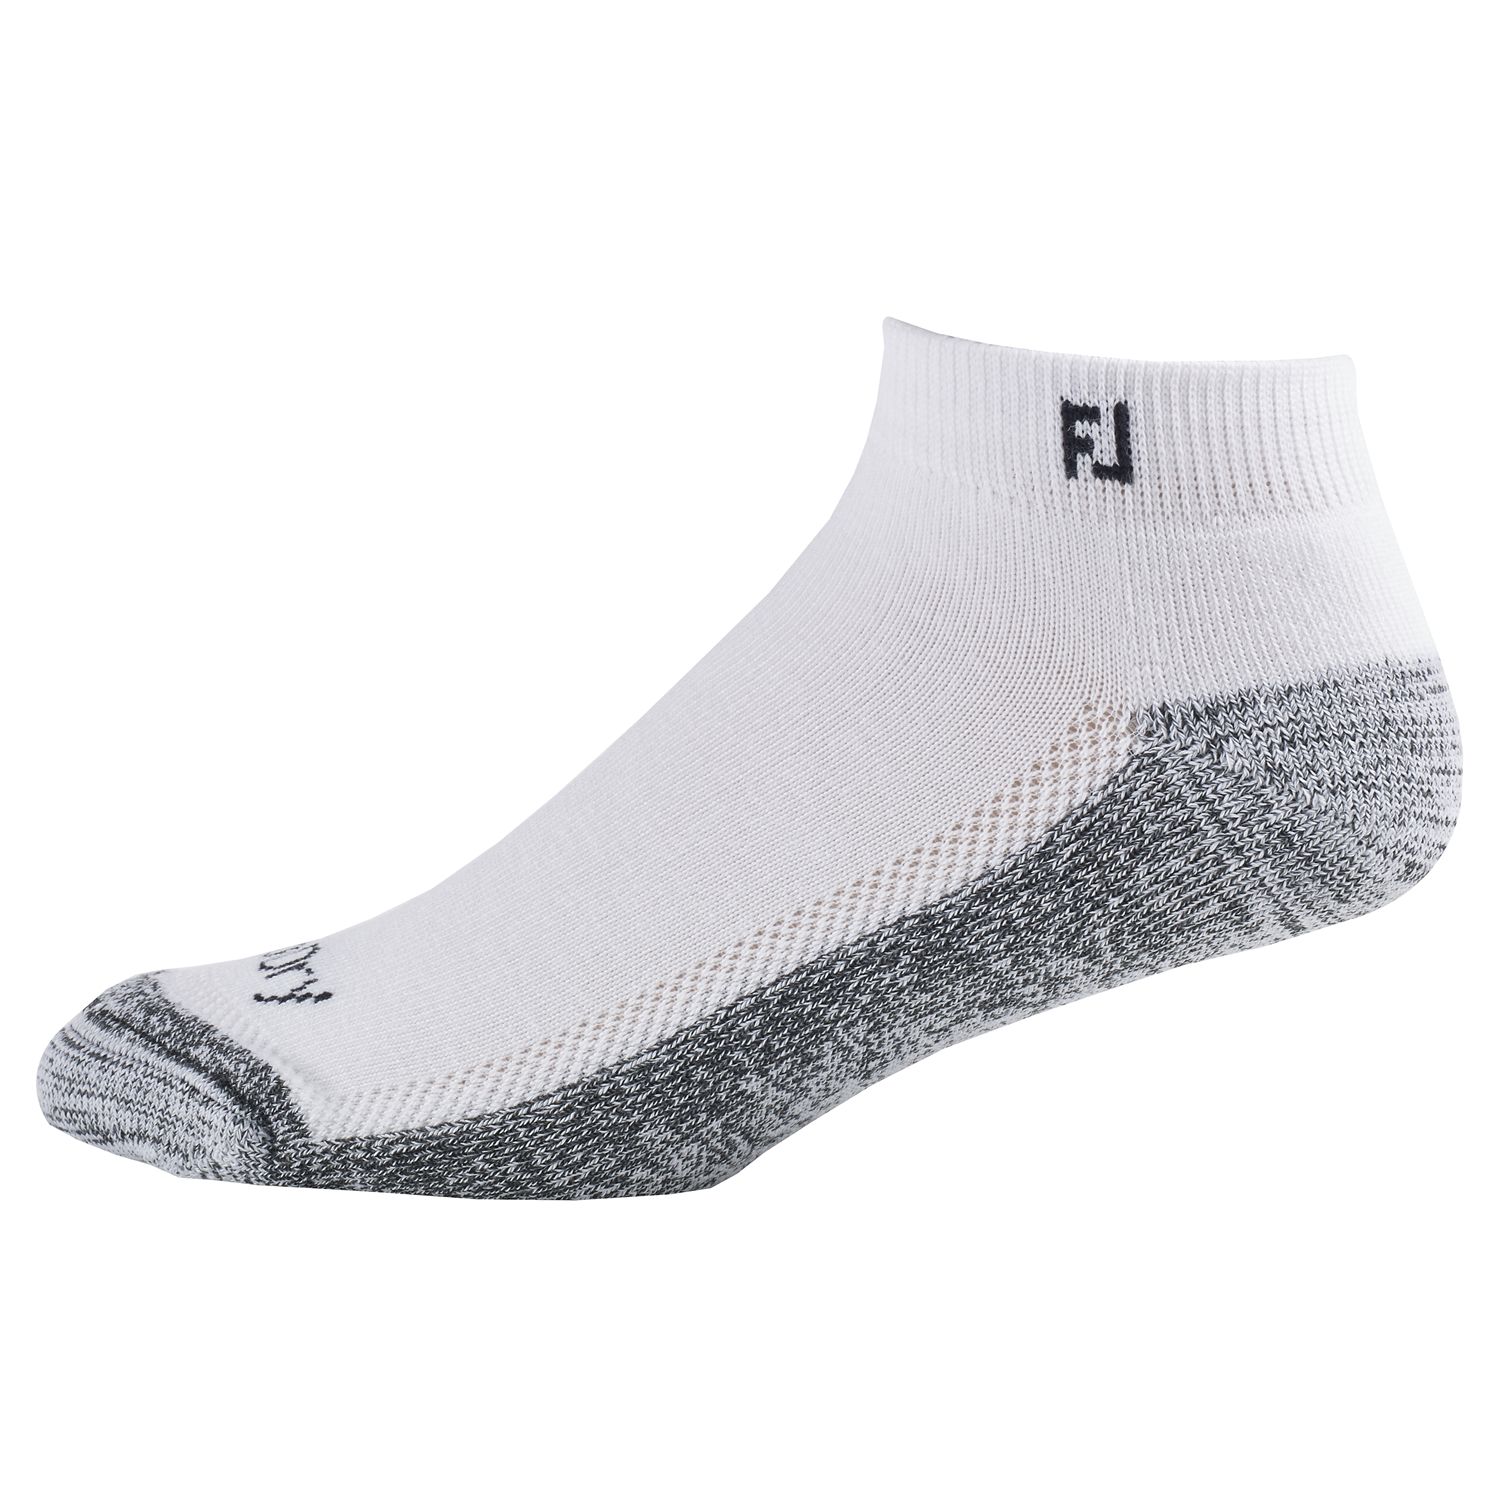 FootJoy ProDry Extreme Ankle/Sport Socks